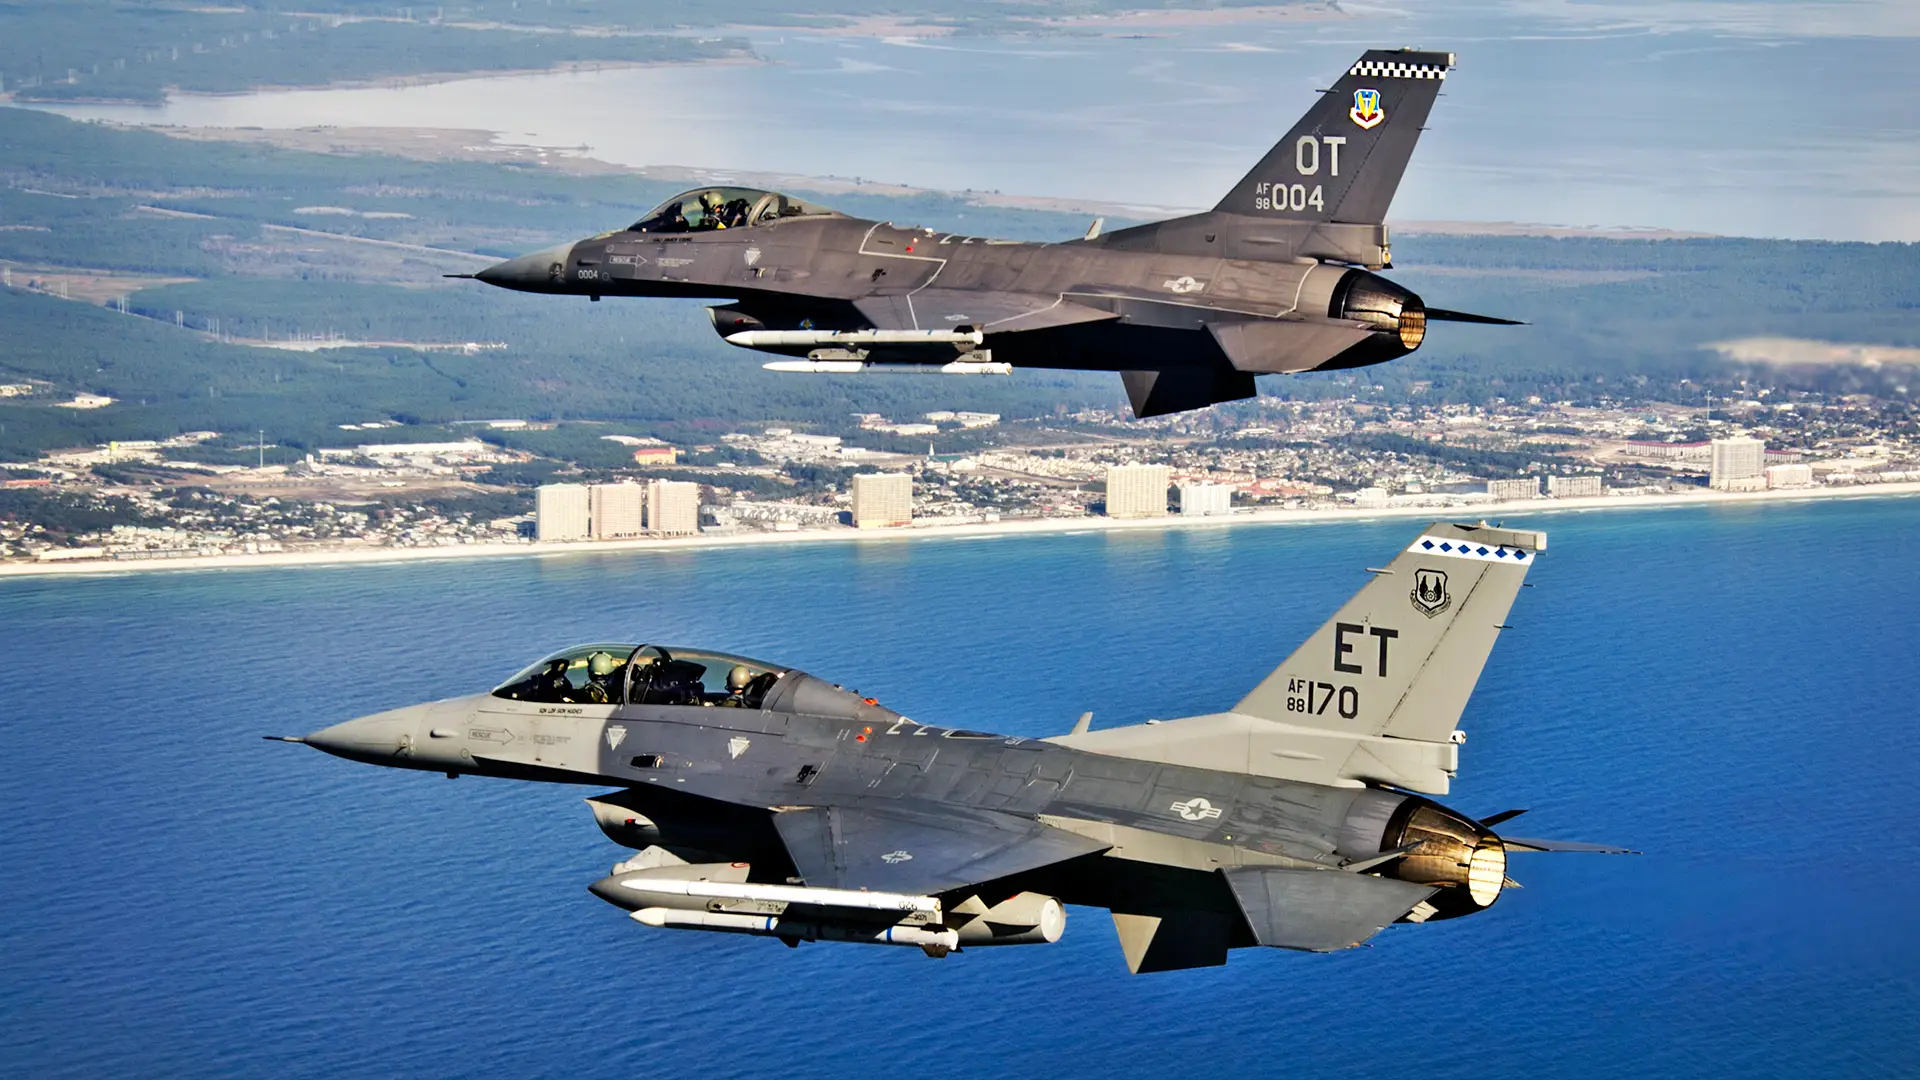 Projekt VENOM verwandelt F-16-Kampfjets in experimentelle Drohnen